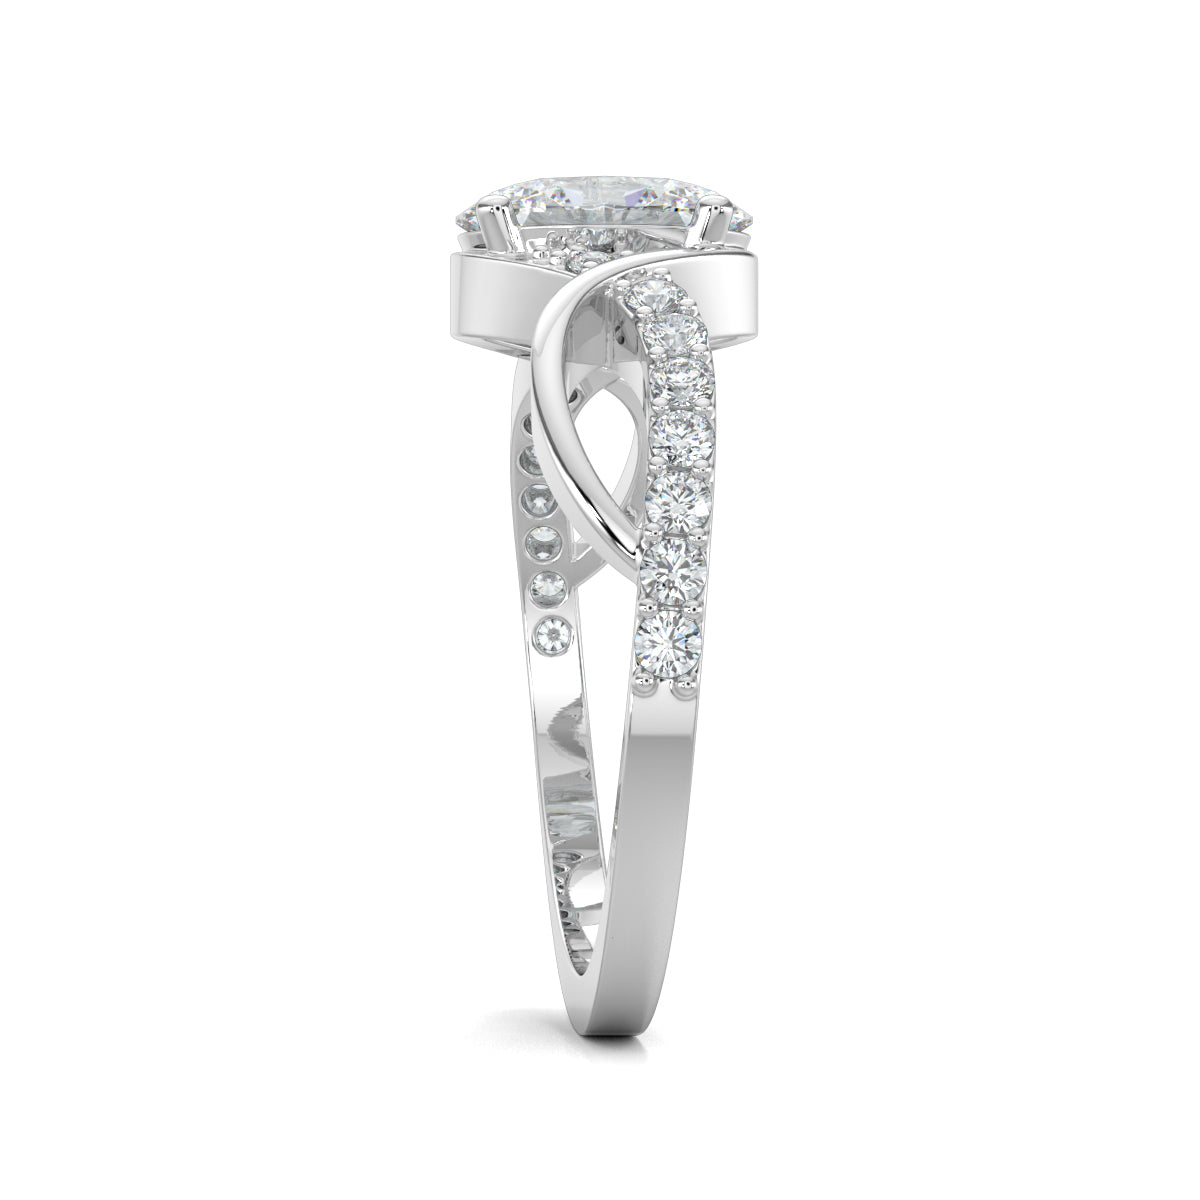 White Gold, Diamond Ring, Natural diamond ring, Curvaceous Diamond Ring, Everyday Diamond Ring, Lab-Grown Diamonds, Oval Diamond, Intertwining Bands, Ethical Jewelry, Sustainable Luxury, Diamond Jewelry